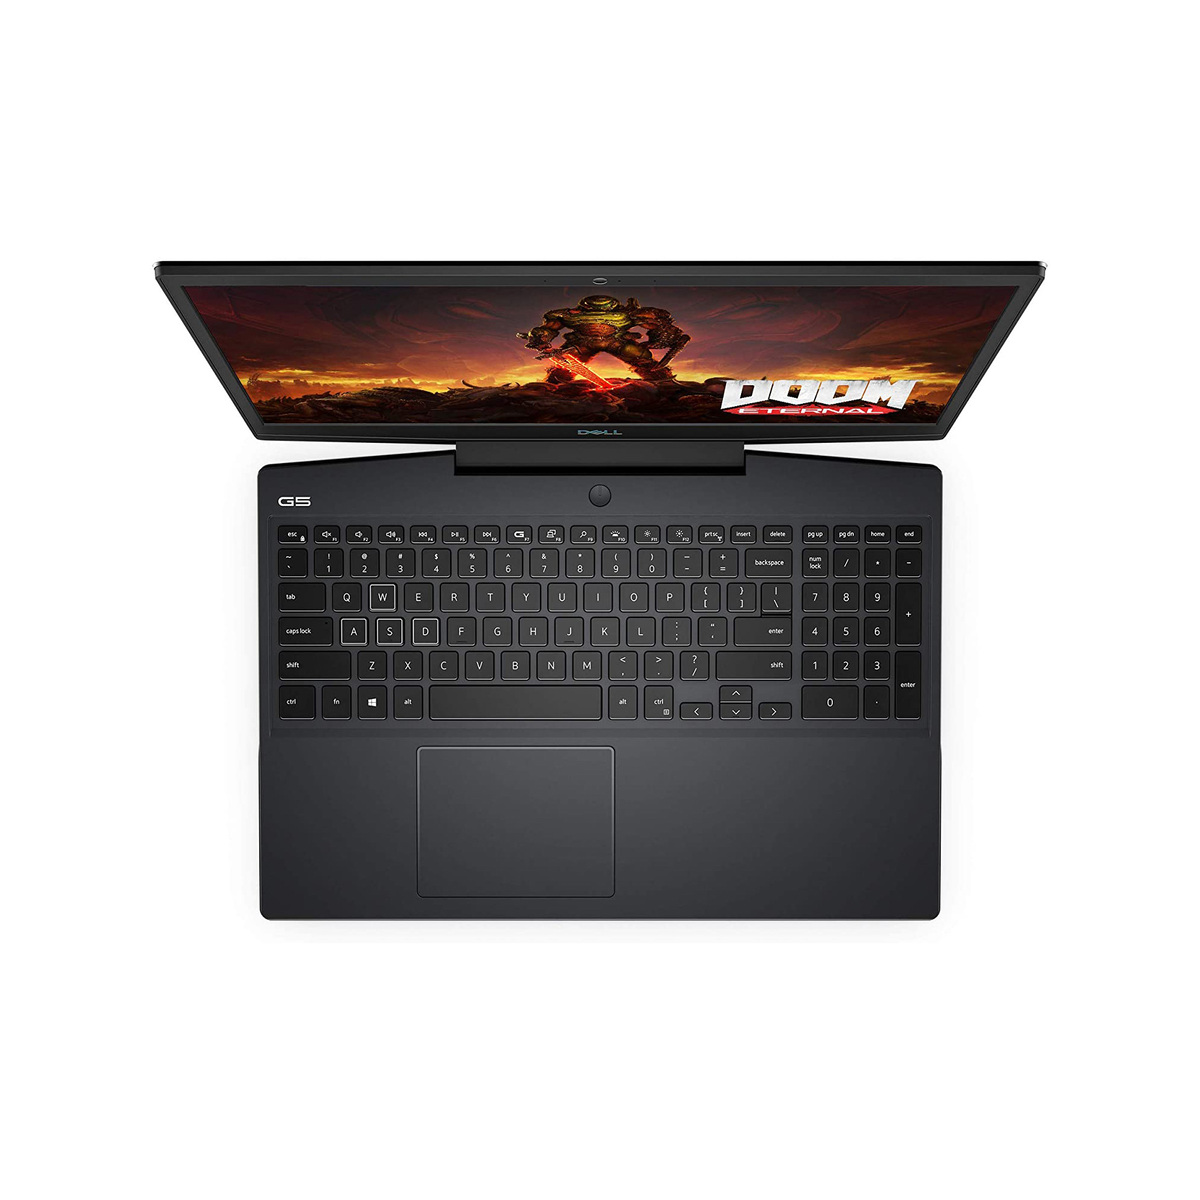 Dell Gaming Laptop G5-5500,  Intel Core i7-10750H 10th Gen,16GB RAM,1TB SSD,NVIDIA GeForce GTX 6GB GDDR6, Windows 10,Black